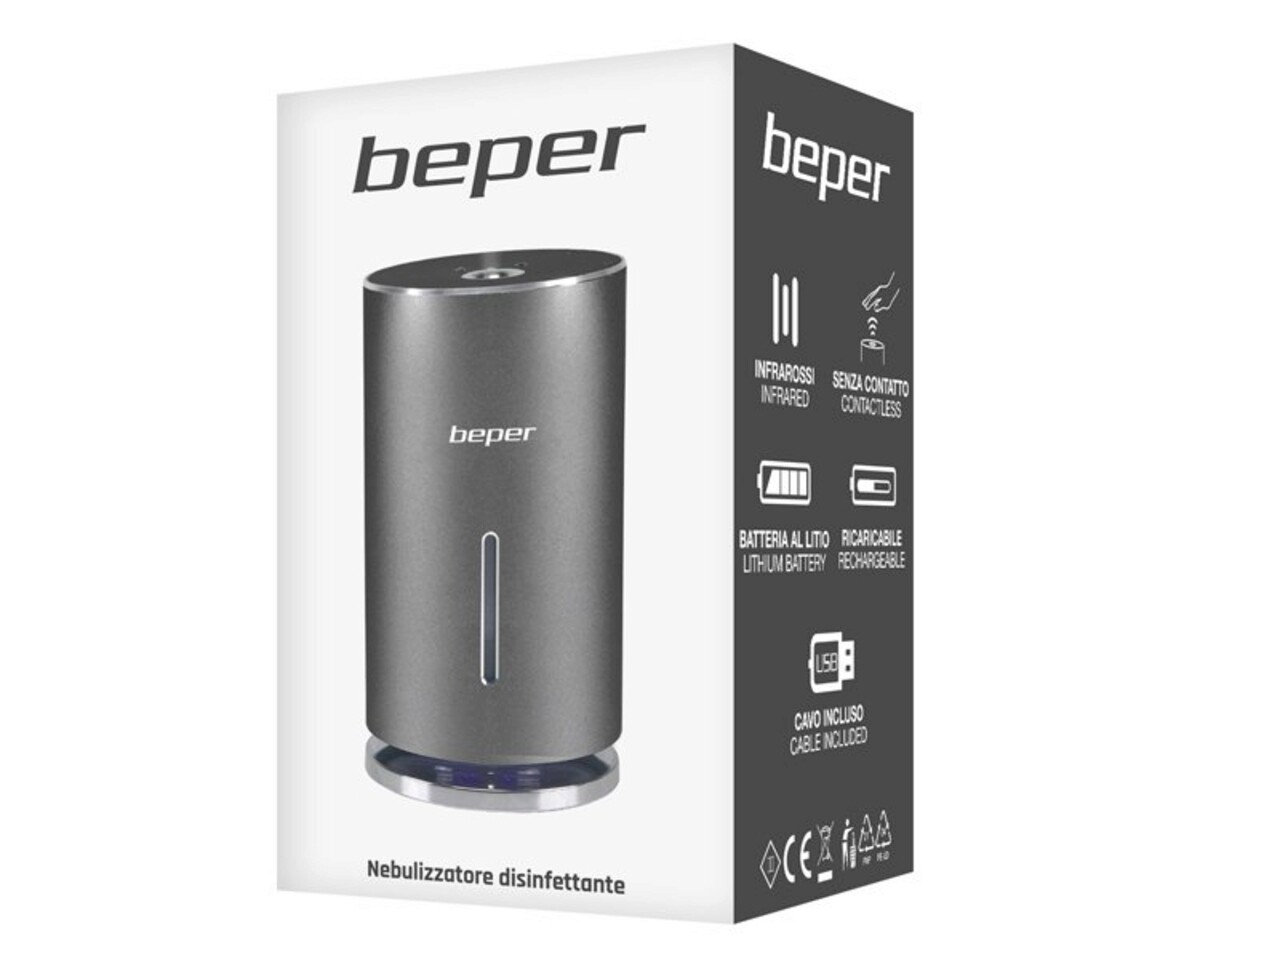 Dezinfectant electric pentru maini Beper, 2-4 W, 6.5x6.5x11.5 cm, ABS, gri